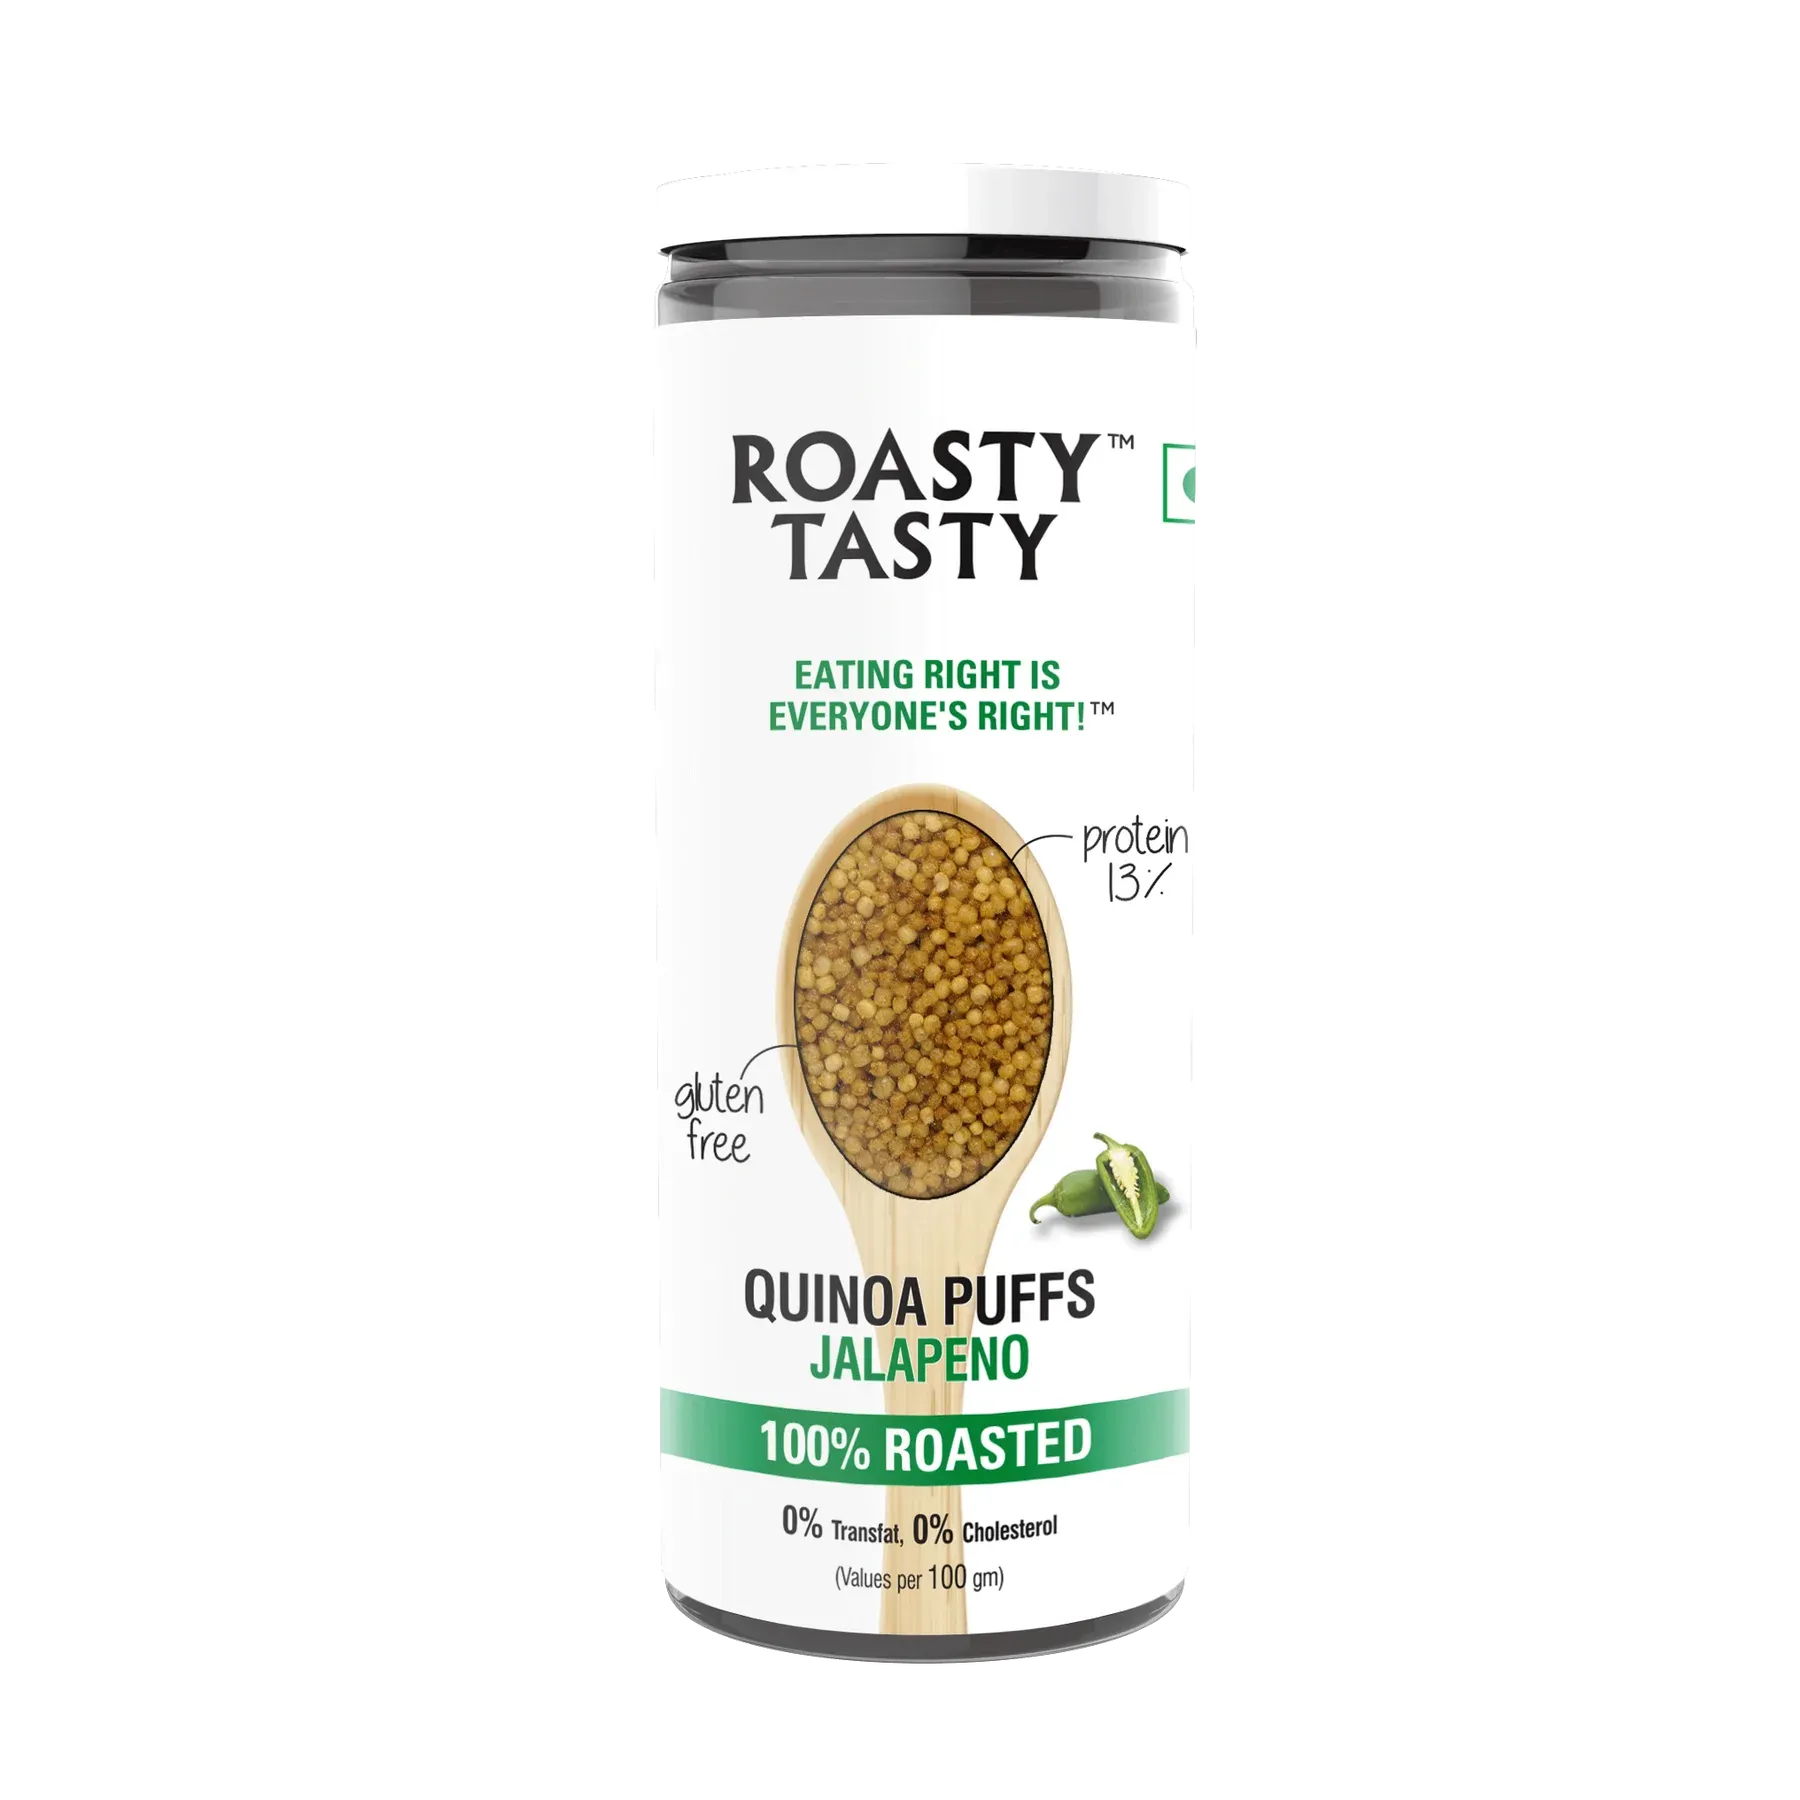 Roasty Tasty Quinoa Puffs Jalapeno Image